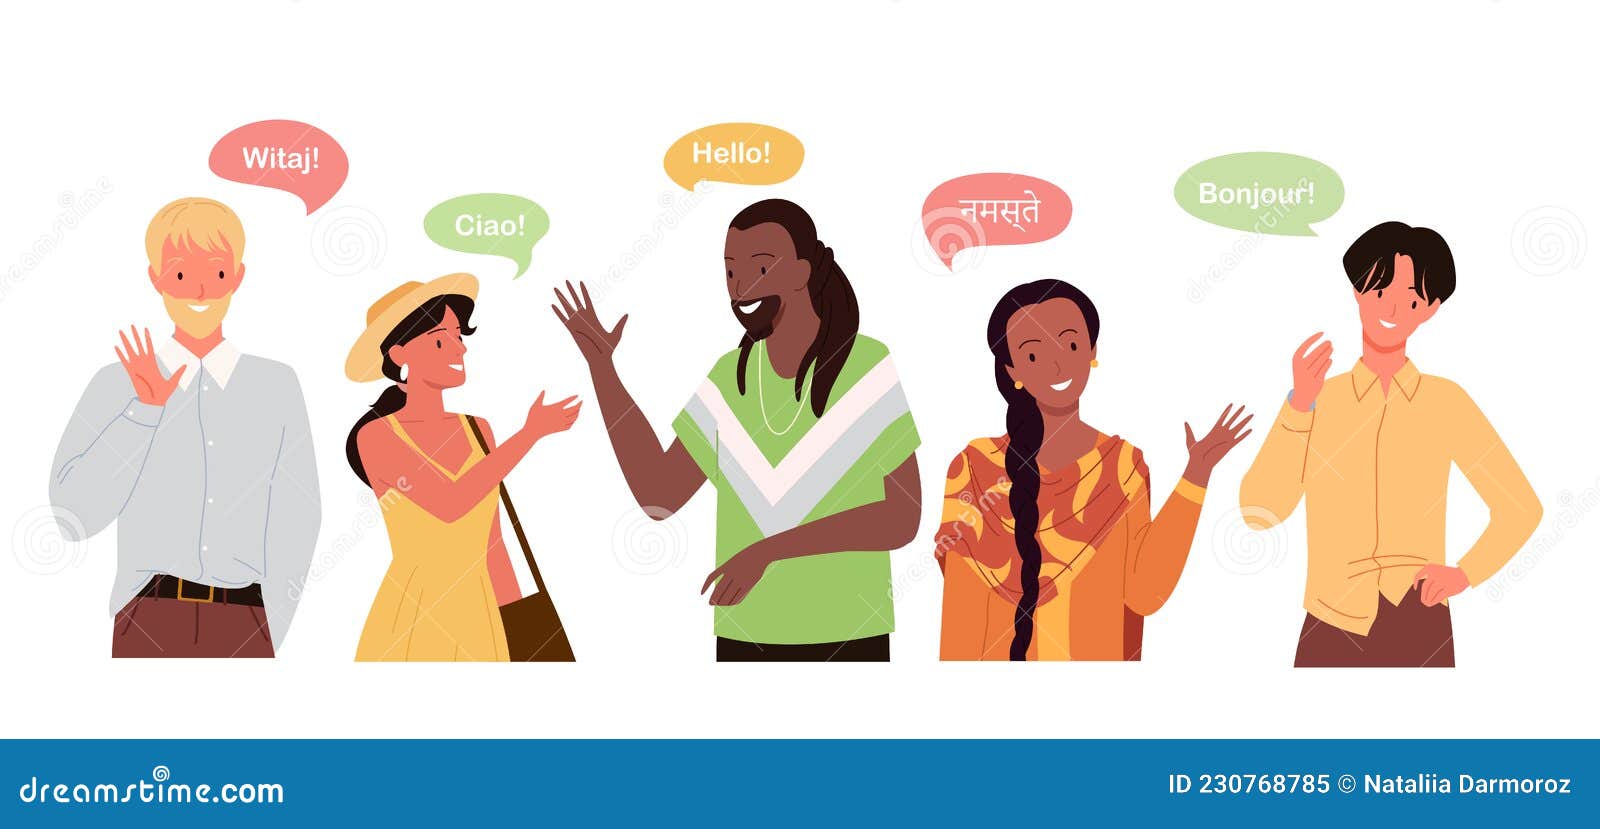 Talk character. Векторная иллюстрация общение на разных языках. Polite language vector Art.